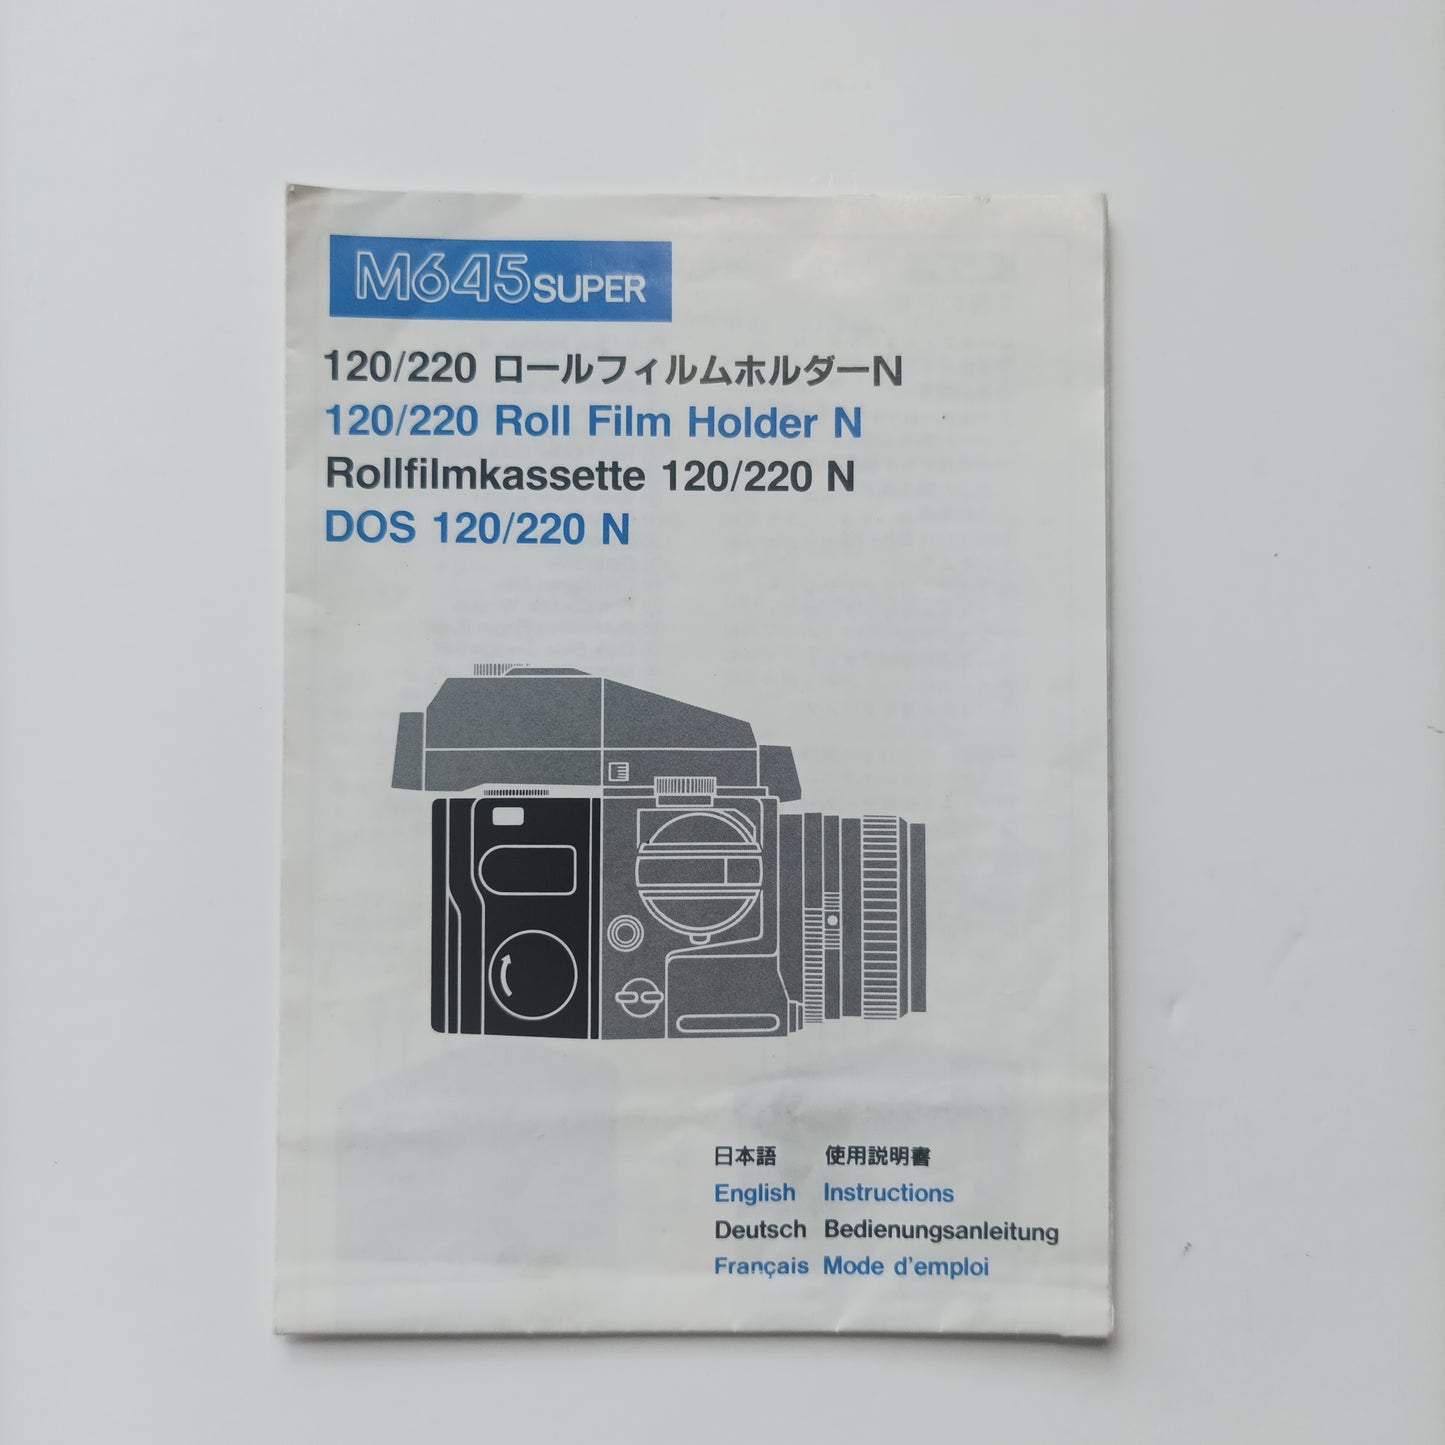 mamiya m645 super 120/220 roll film holder n instruction manual